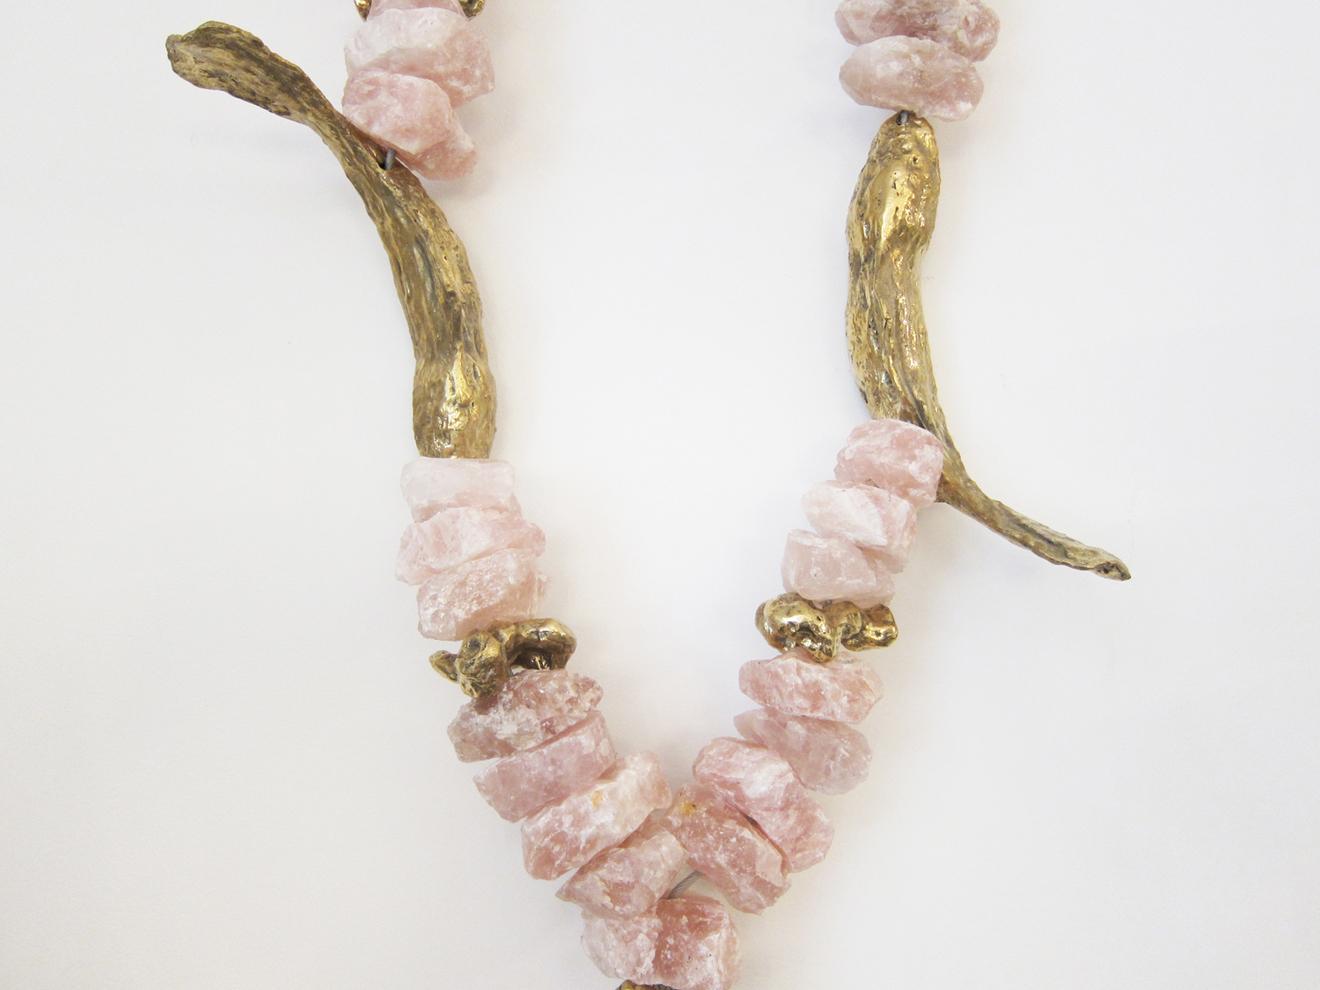 Organic Modern Pink or Rose Quartz and Bronze Necklace Wall Sculpture